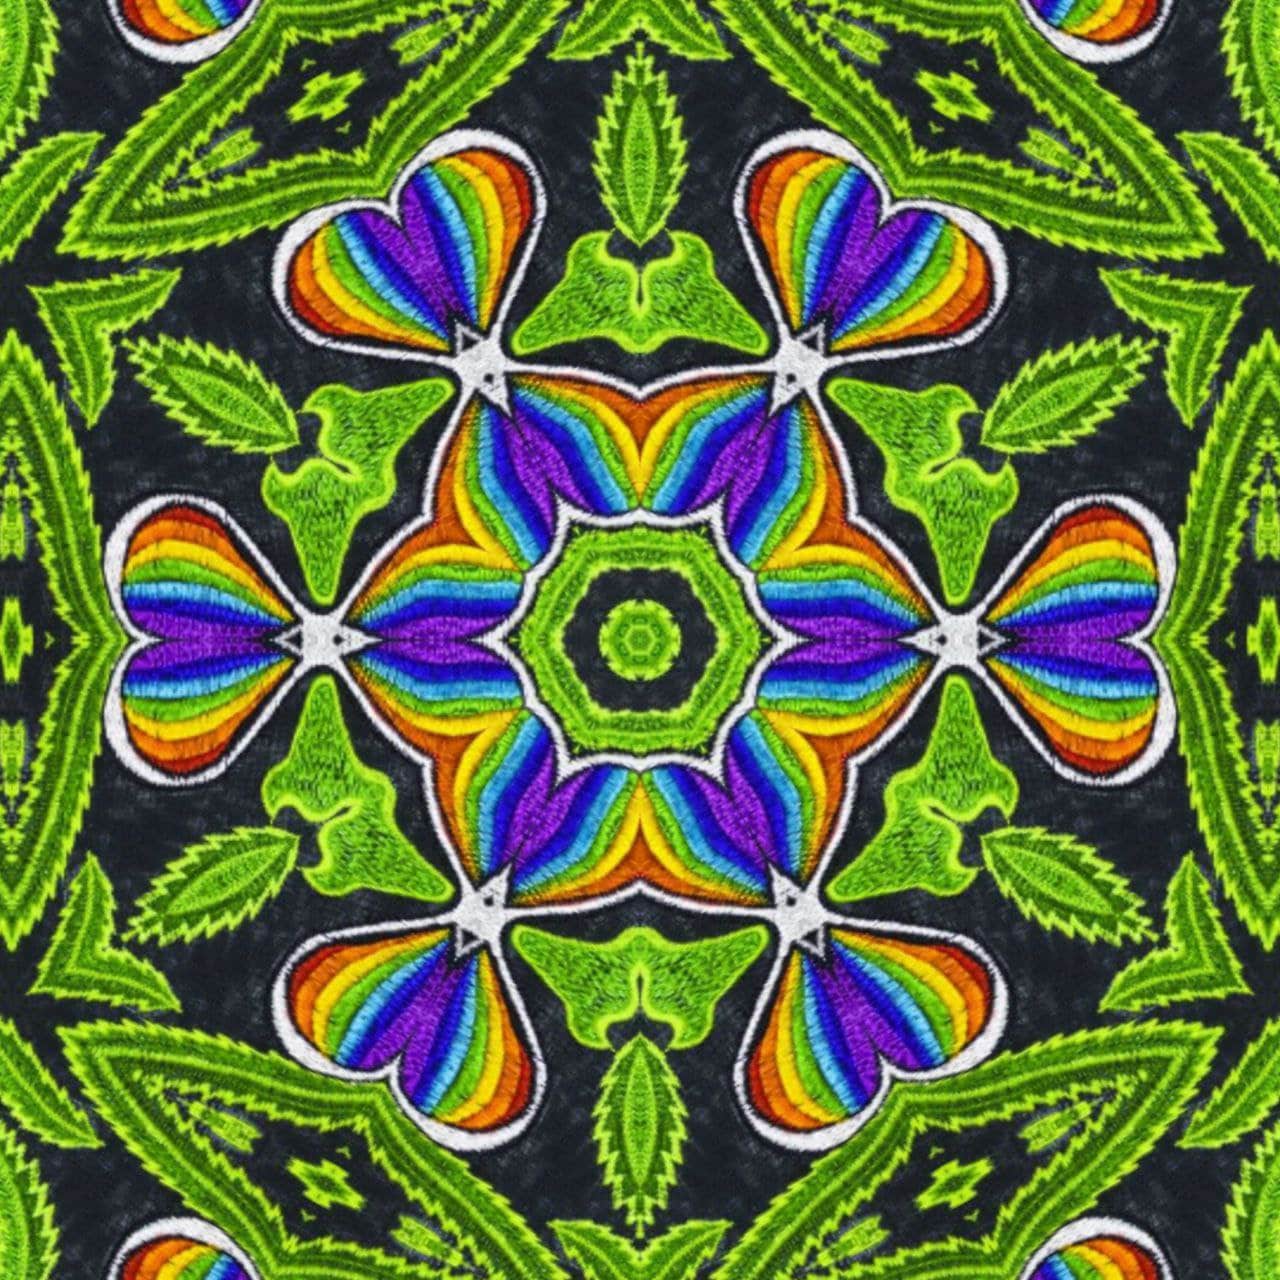 Rainbow Happy Hippie Hemp Spirit Patch with Marihuana Leaves Cannabis Ganja THC Healing Medicine Garcia Kind Friendly Embroidery Rasta Patch